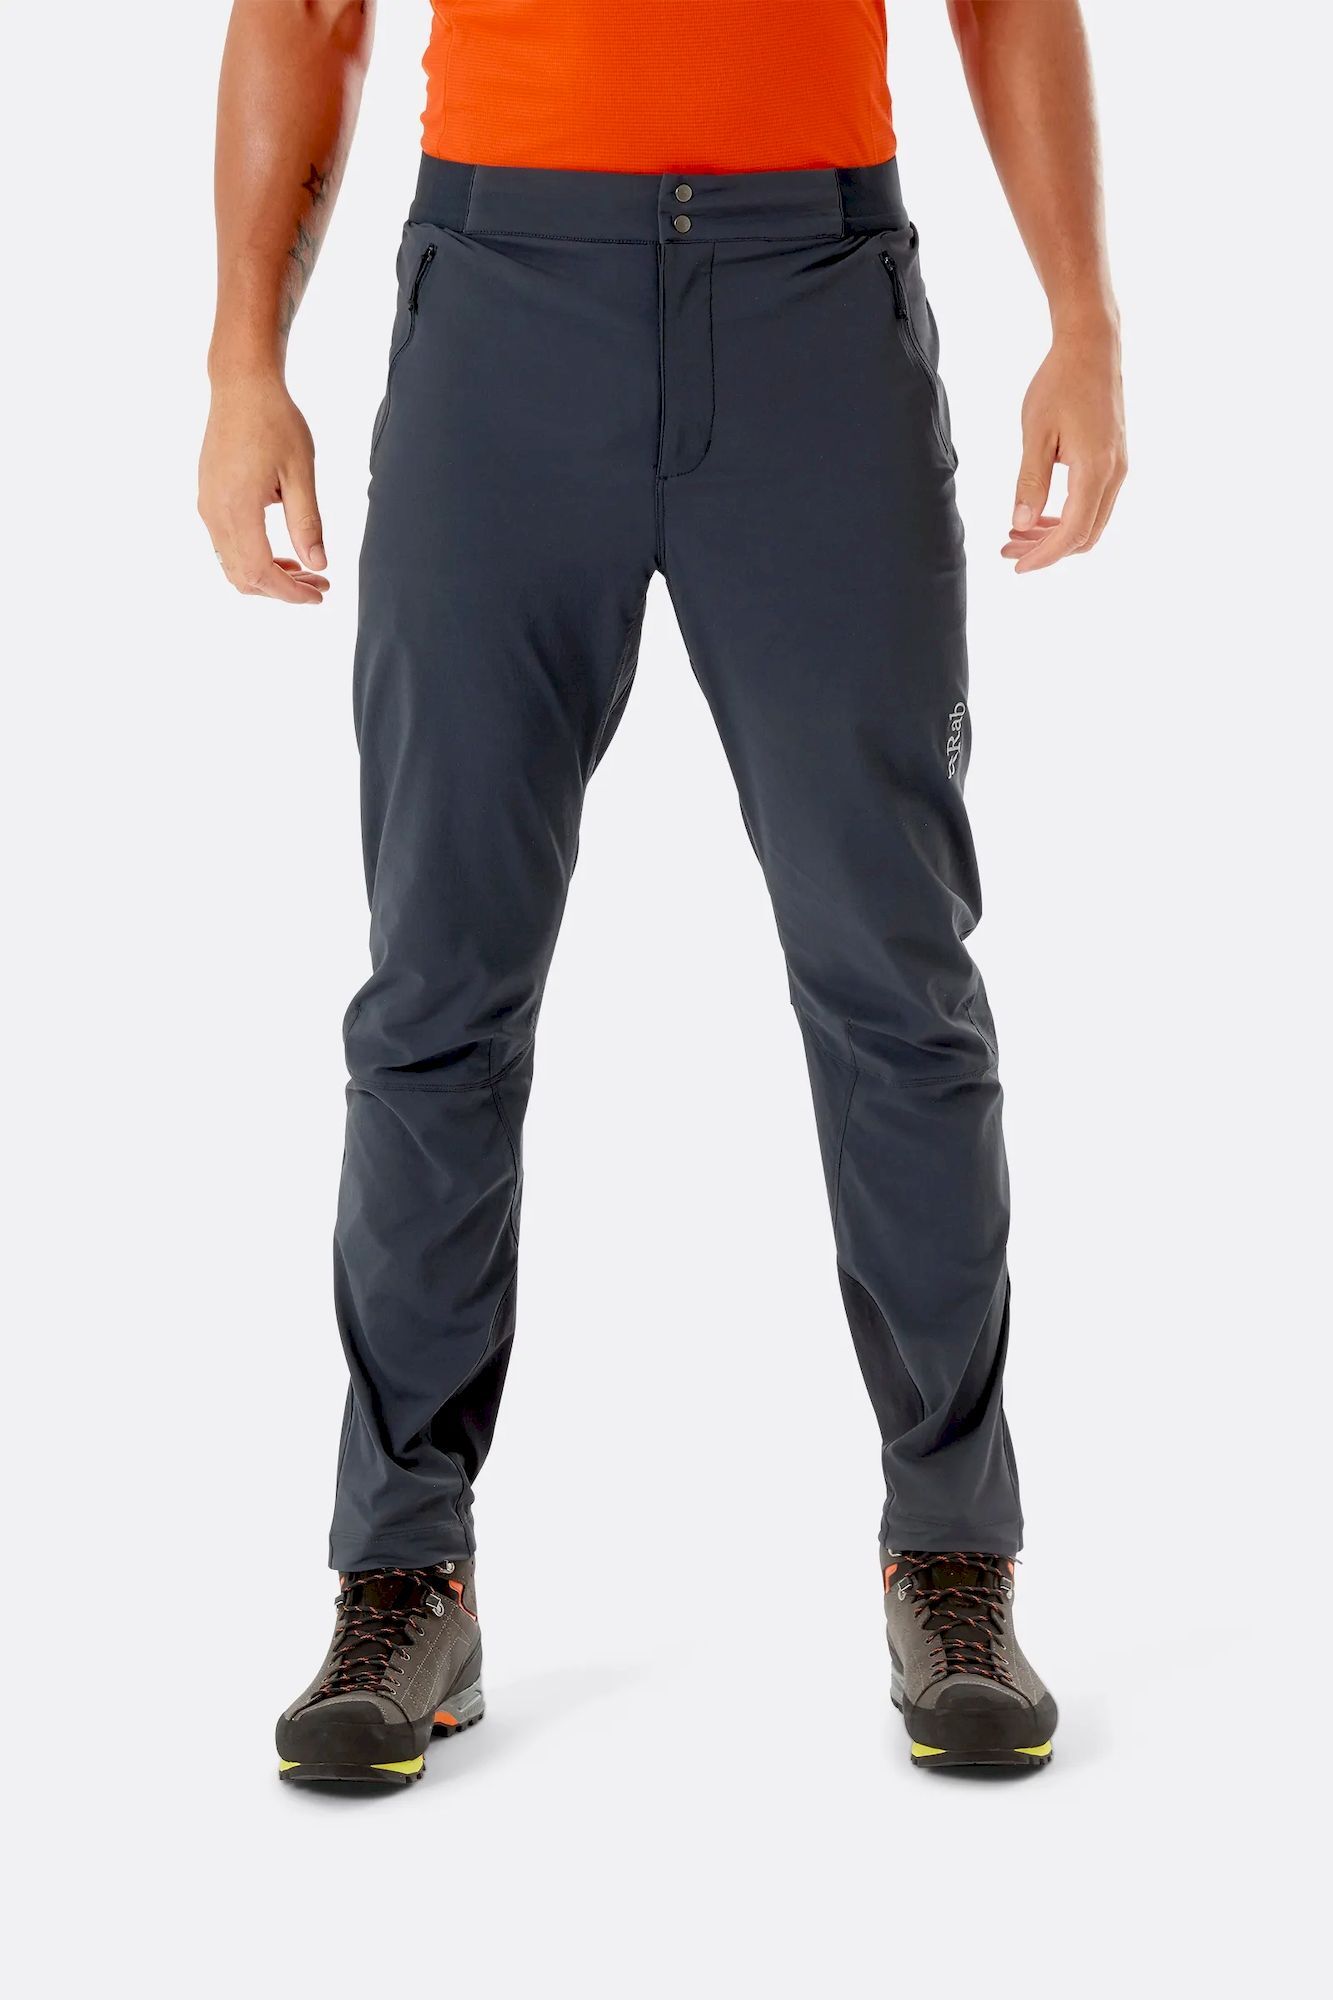 Rab Ascendor Light - Mountaineering trousers - Men's